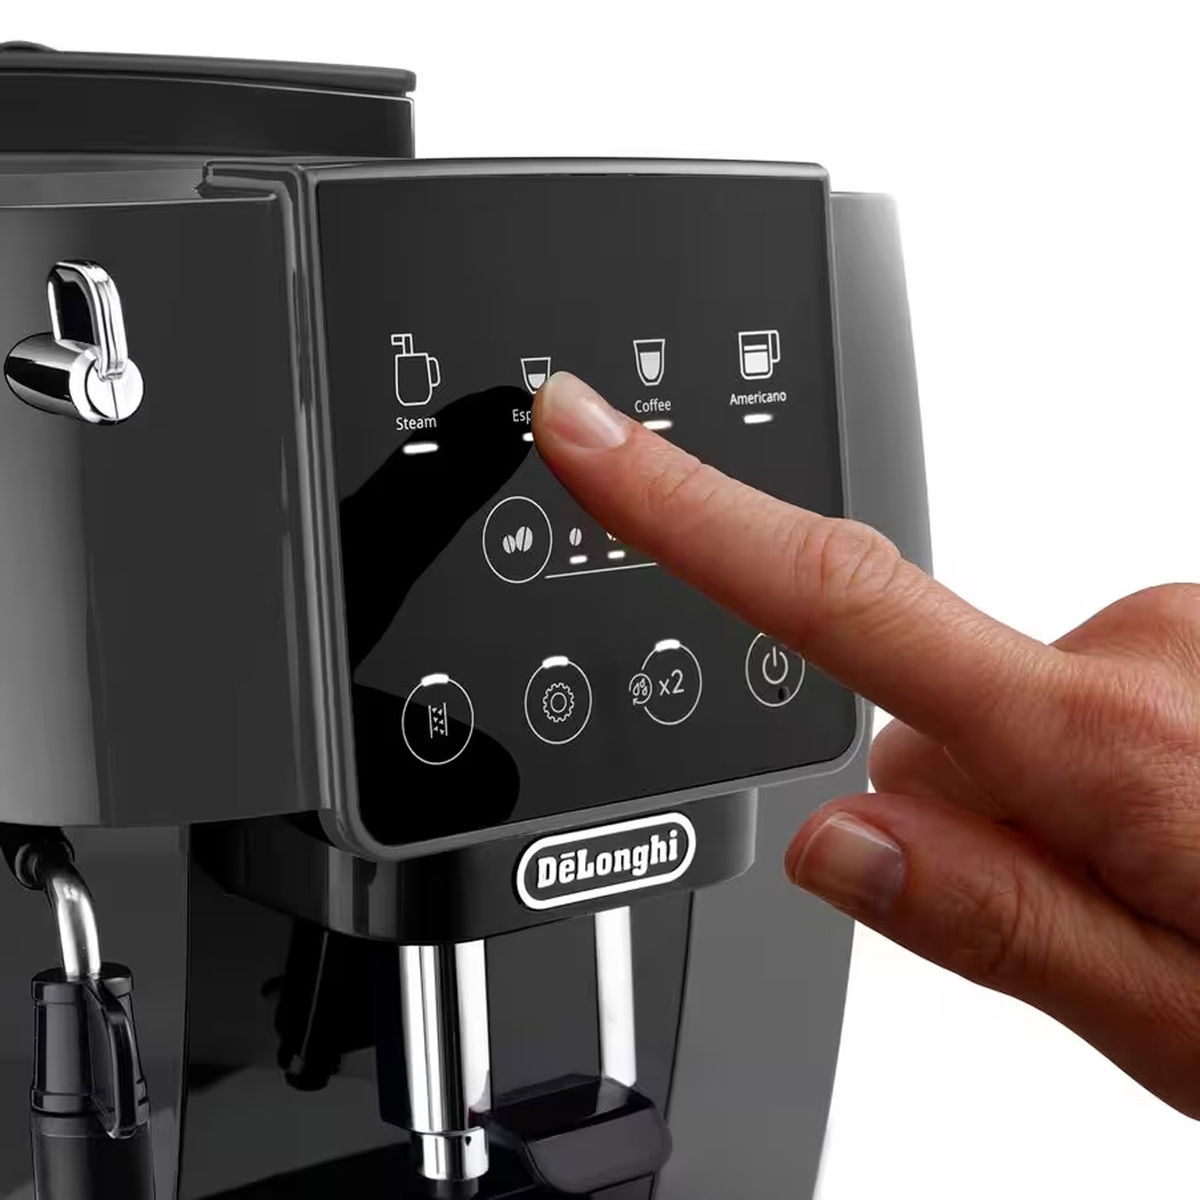 Delonghi Magnifica Start Coffee Machine, Grey Black, ECAM220.22.GB